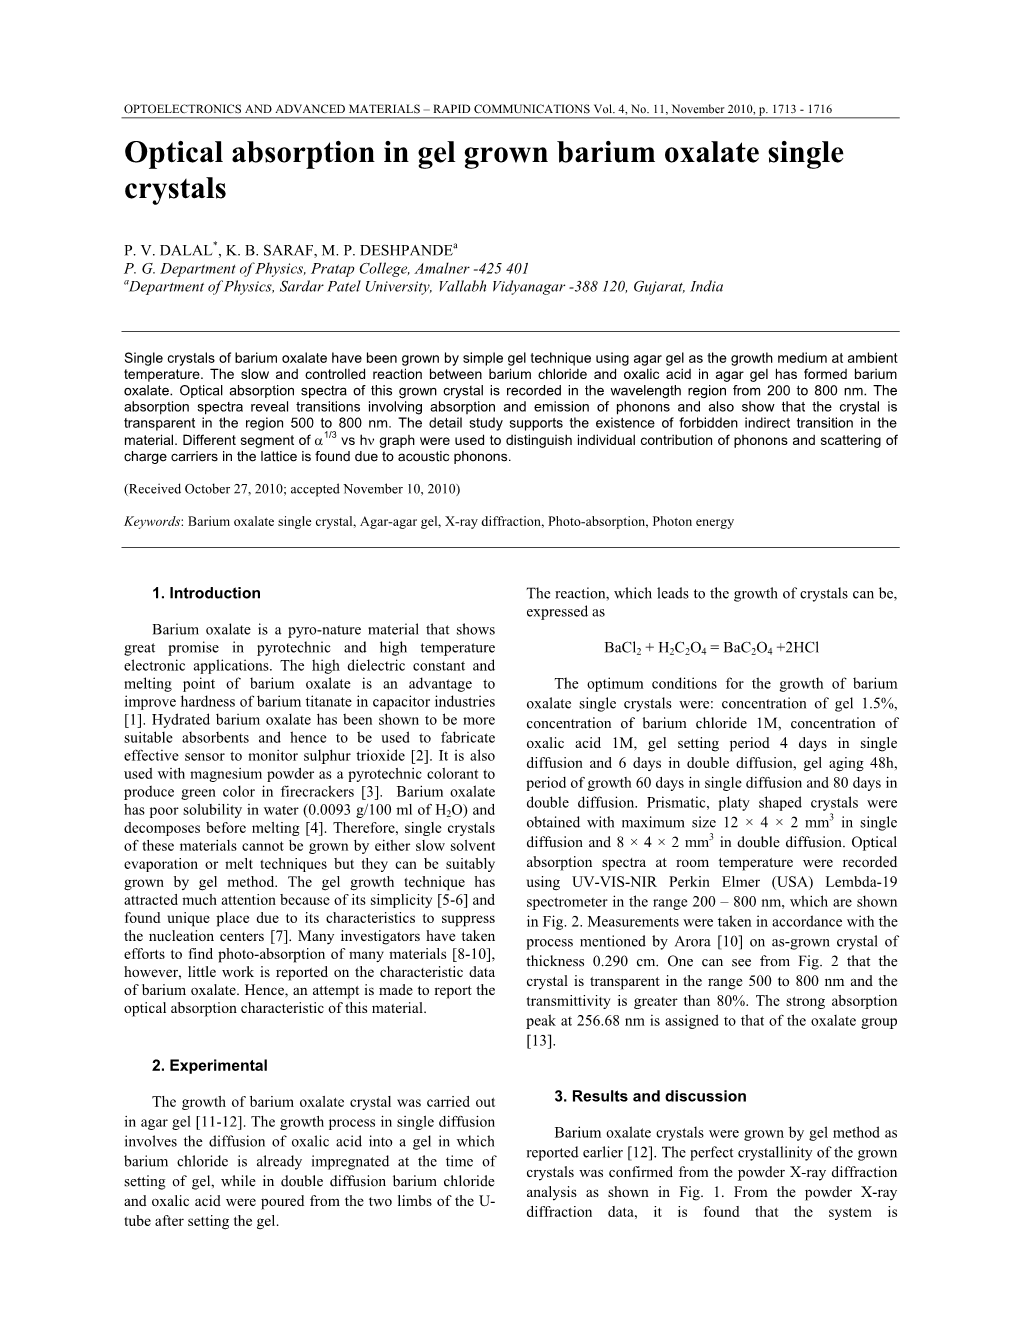 Optical Absorption in Gel Grown Barium Oxalate Single Crystals